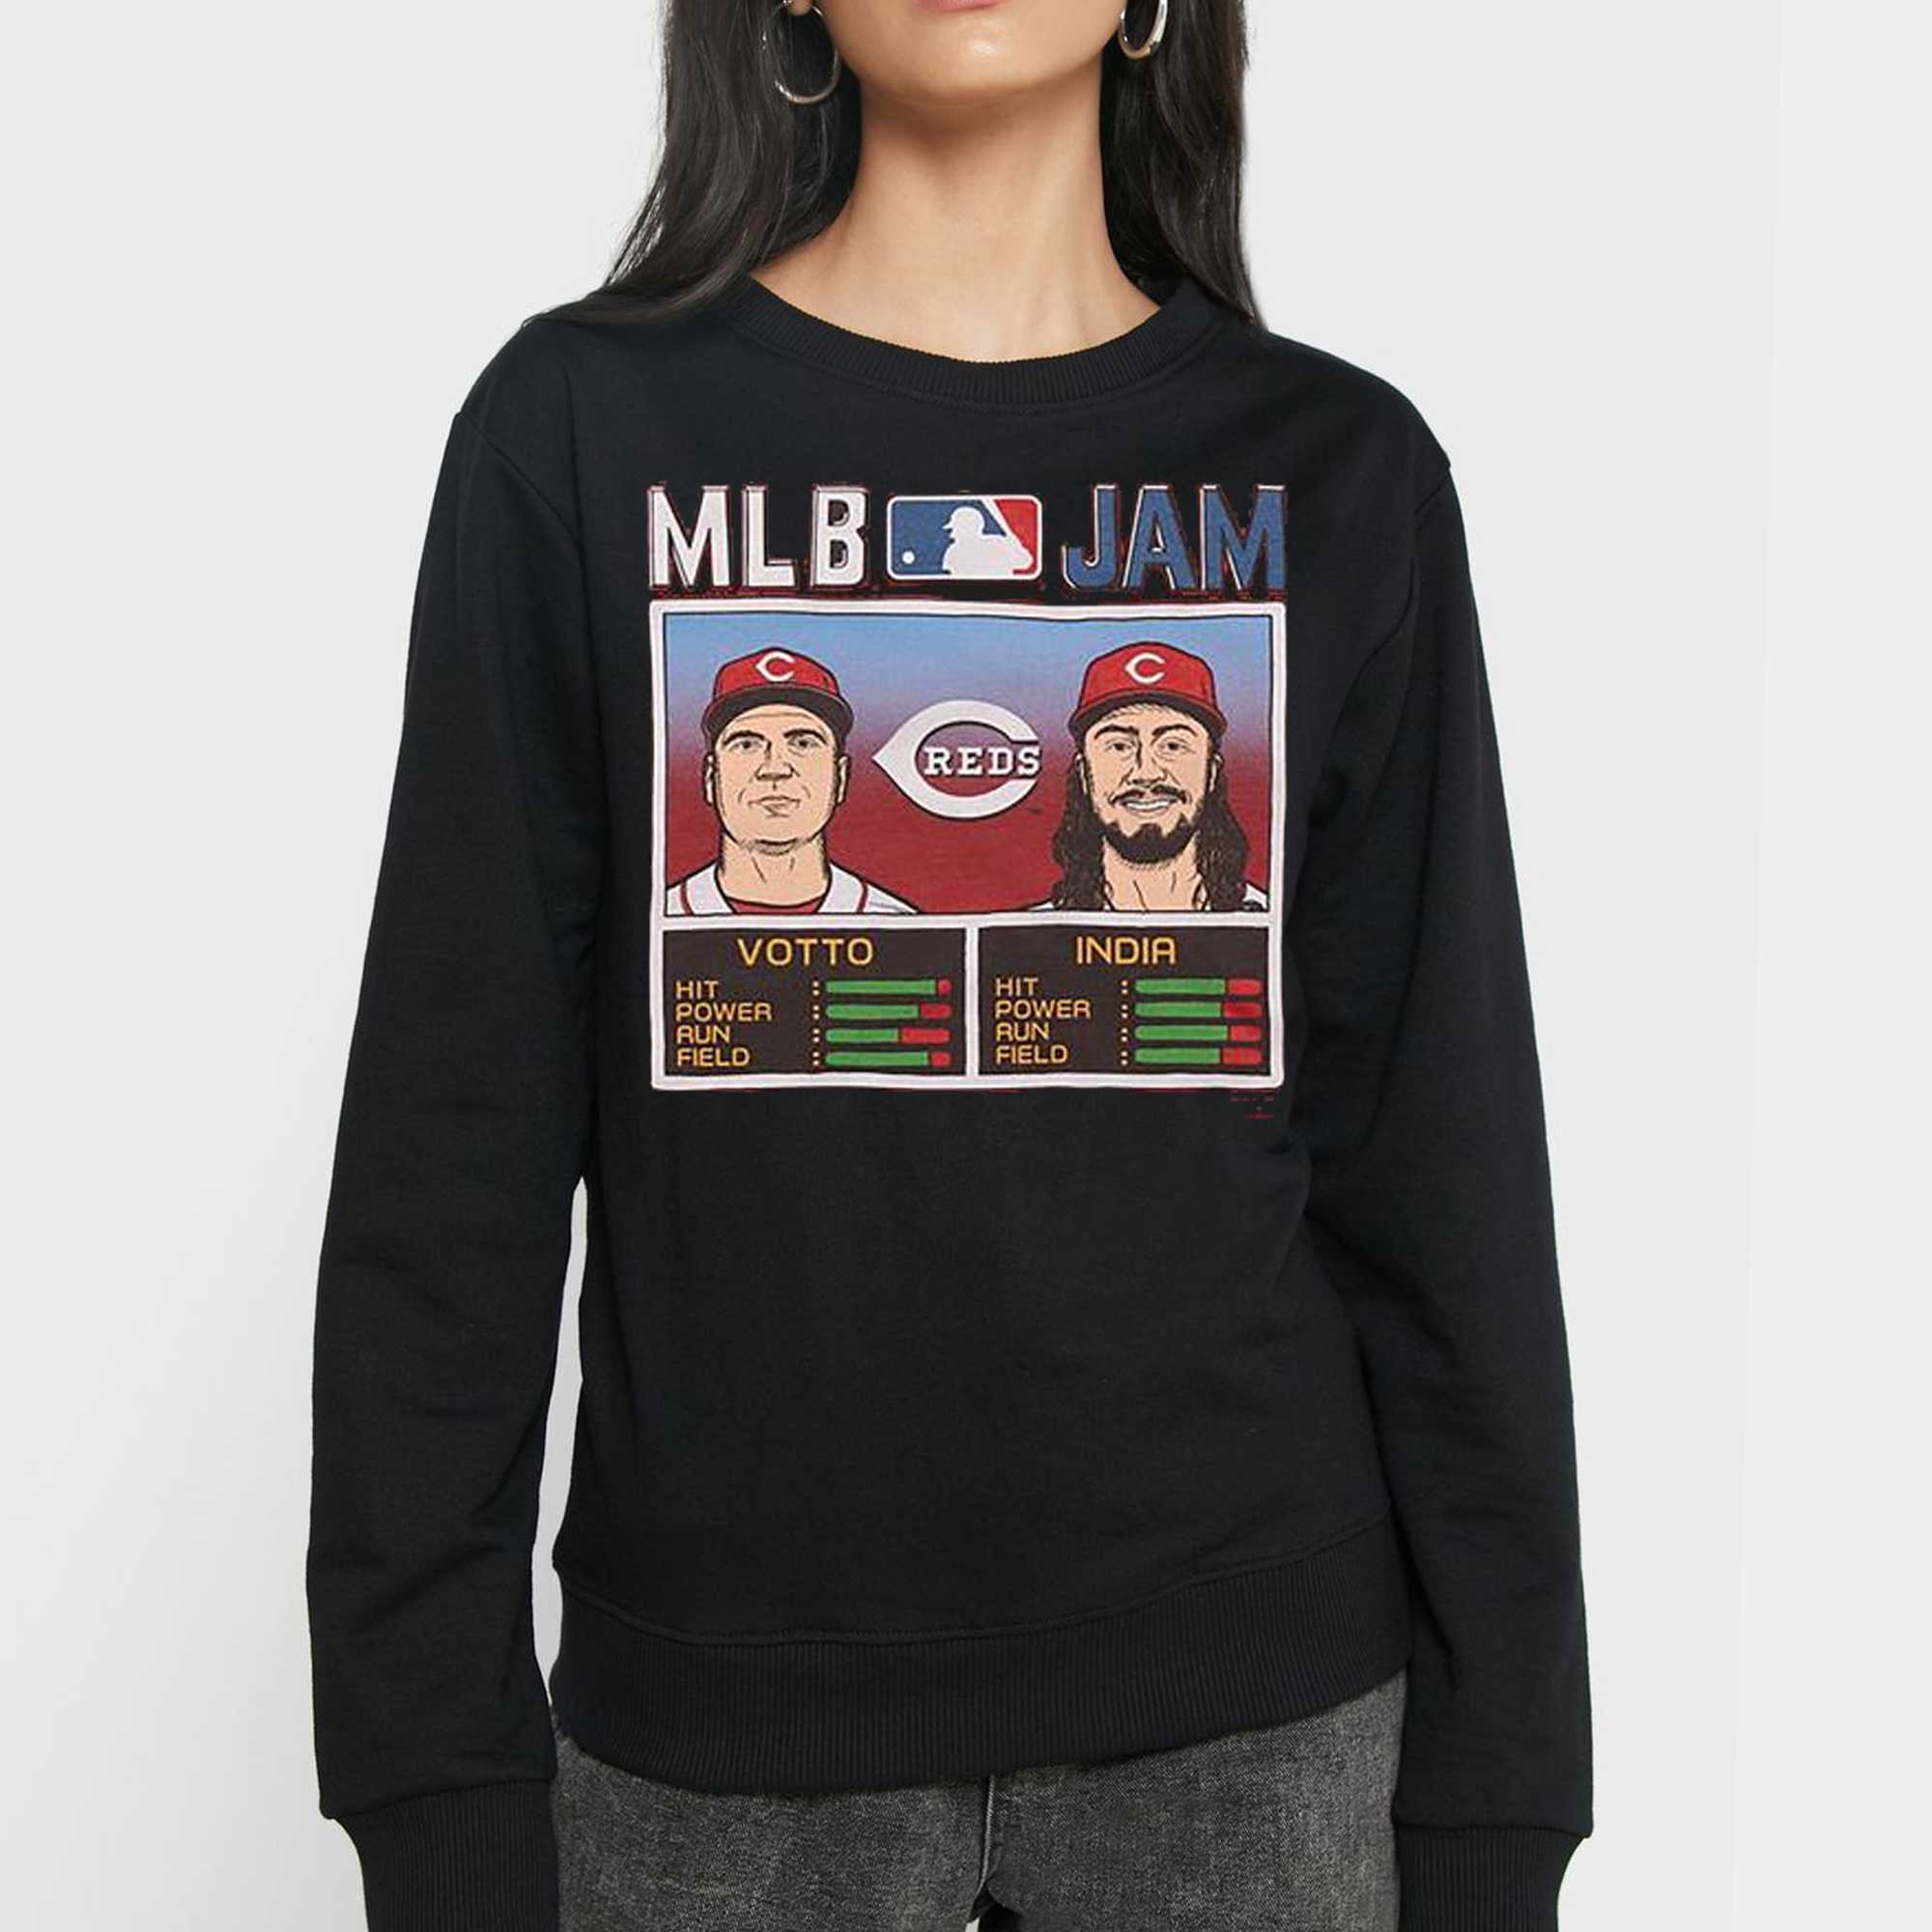 Mlb Jam Reds Joey Votto And Jonathan India Shirt - Shibtee Clothing